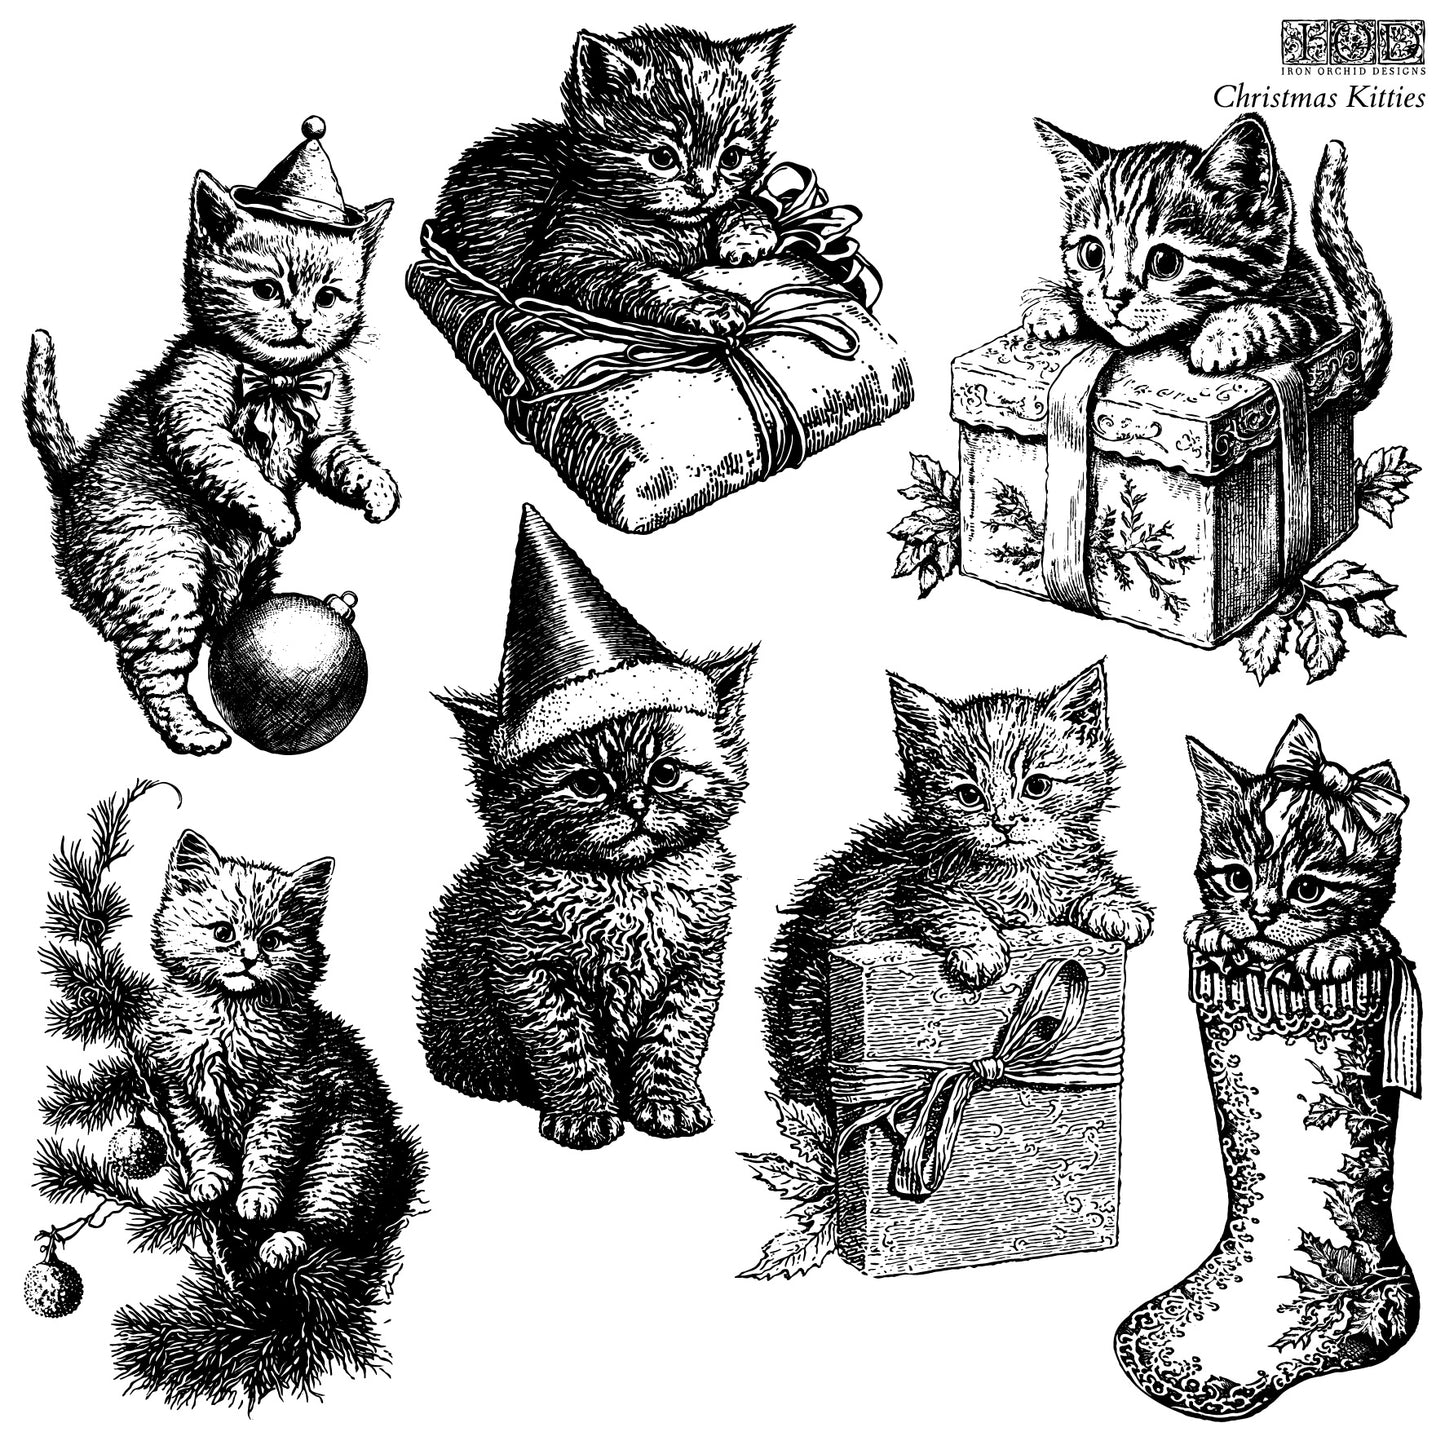 Christmas Kitties stamp